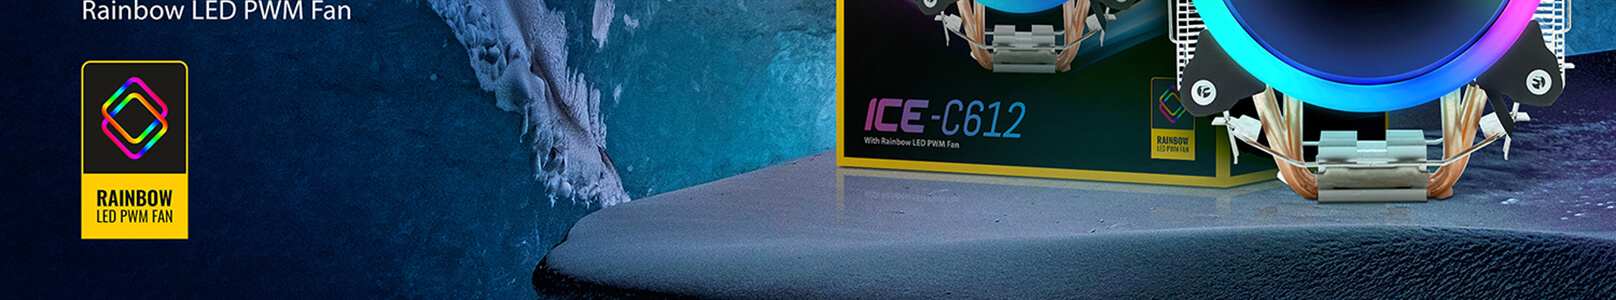 ice-c612-des-image-3.jpg